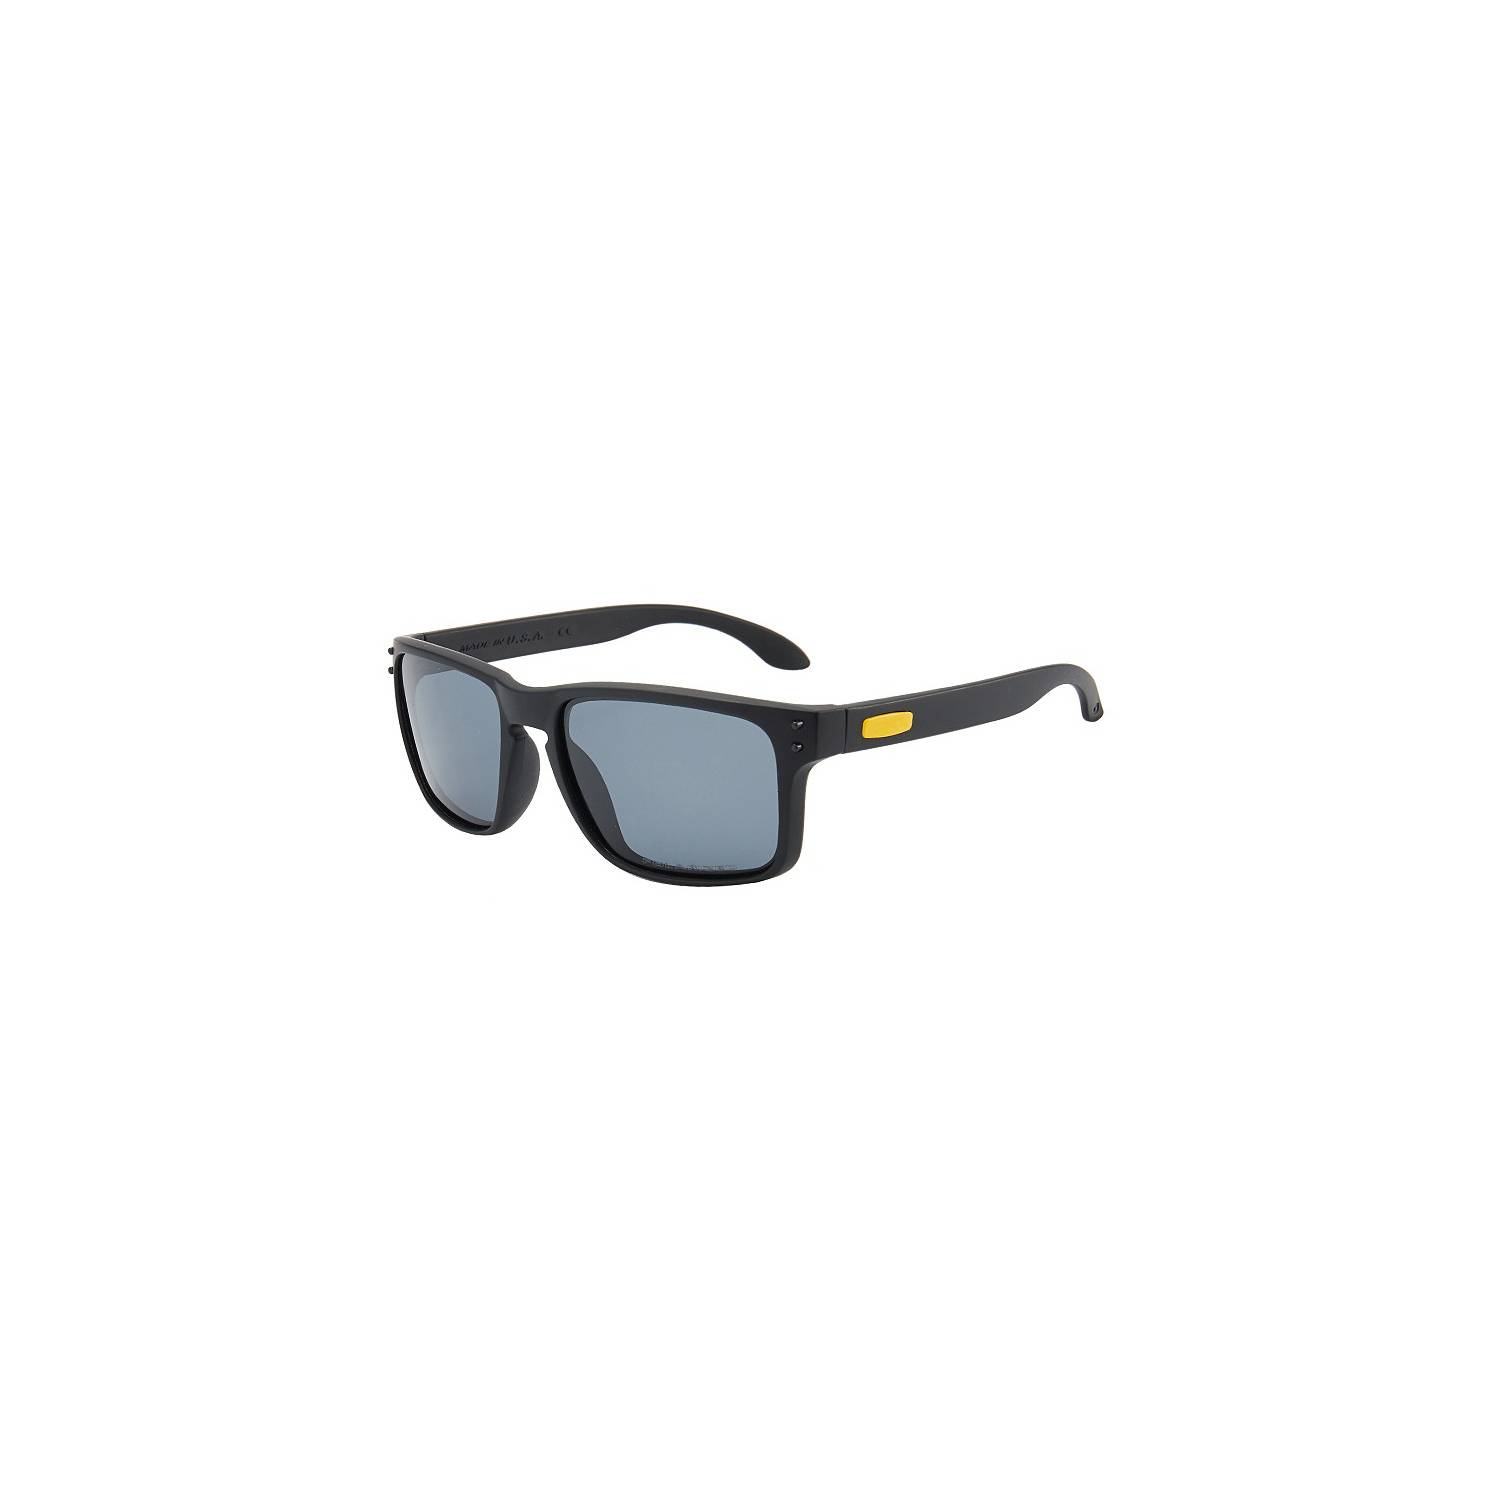 GENERICO gafas de sol Lente Polarizados estilo holbrook uv400